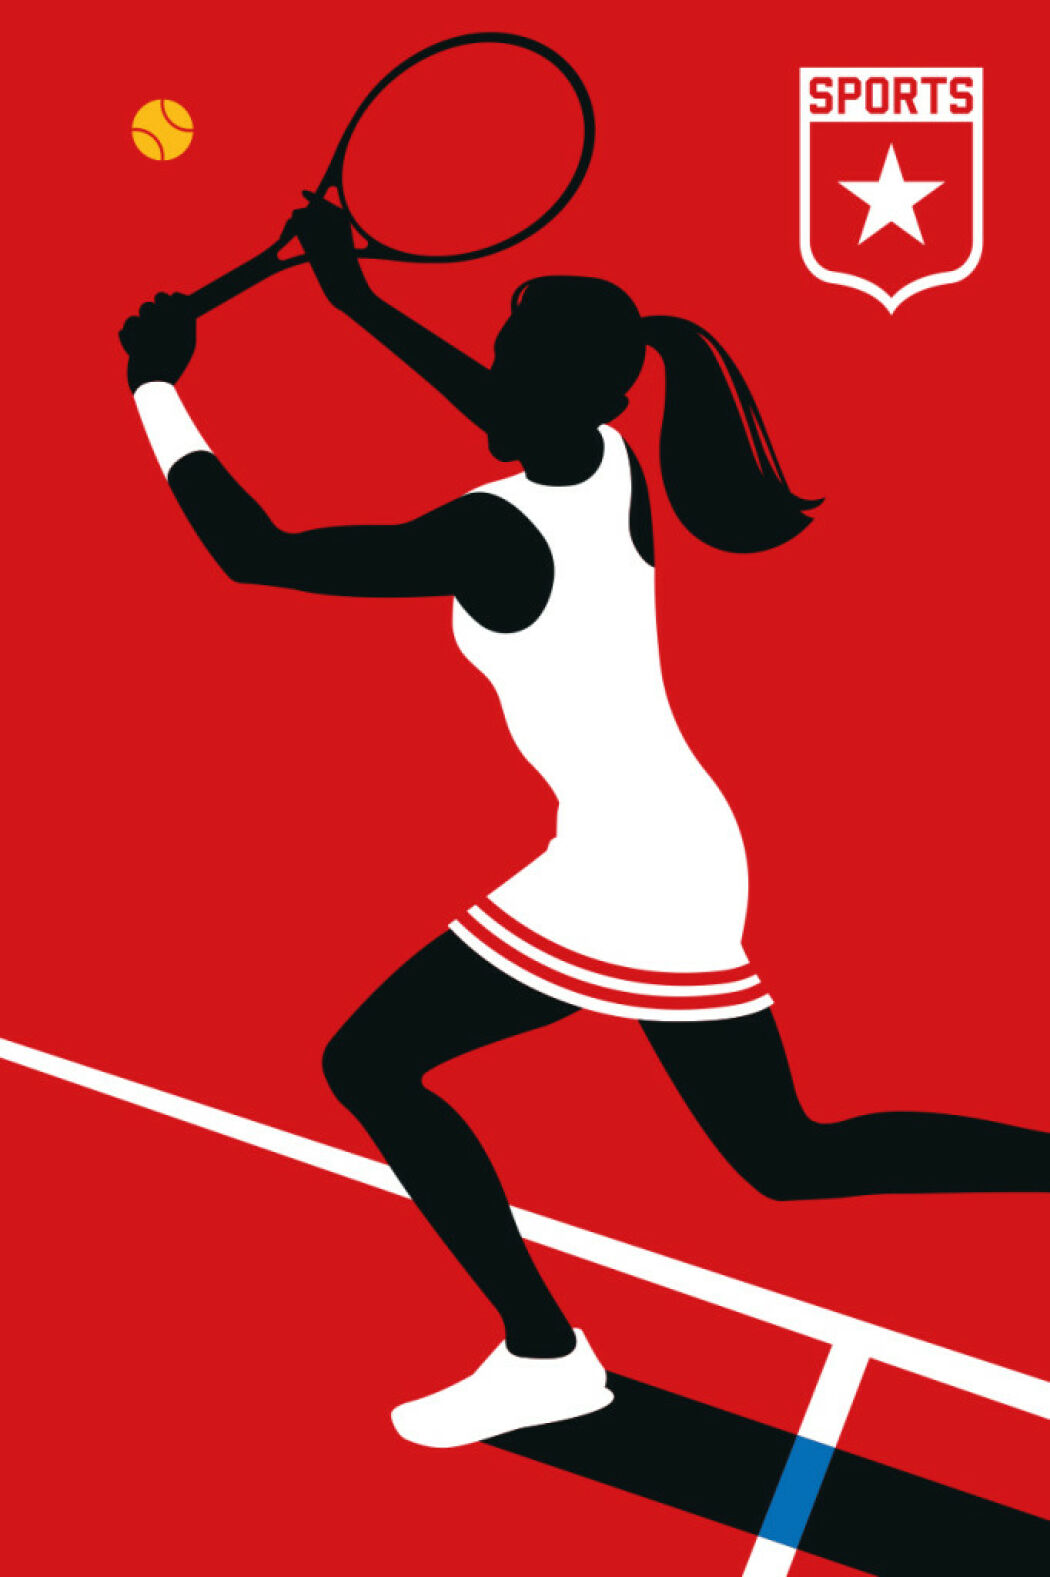 Sports illustrations by Bo Lundberg